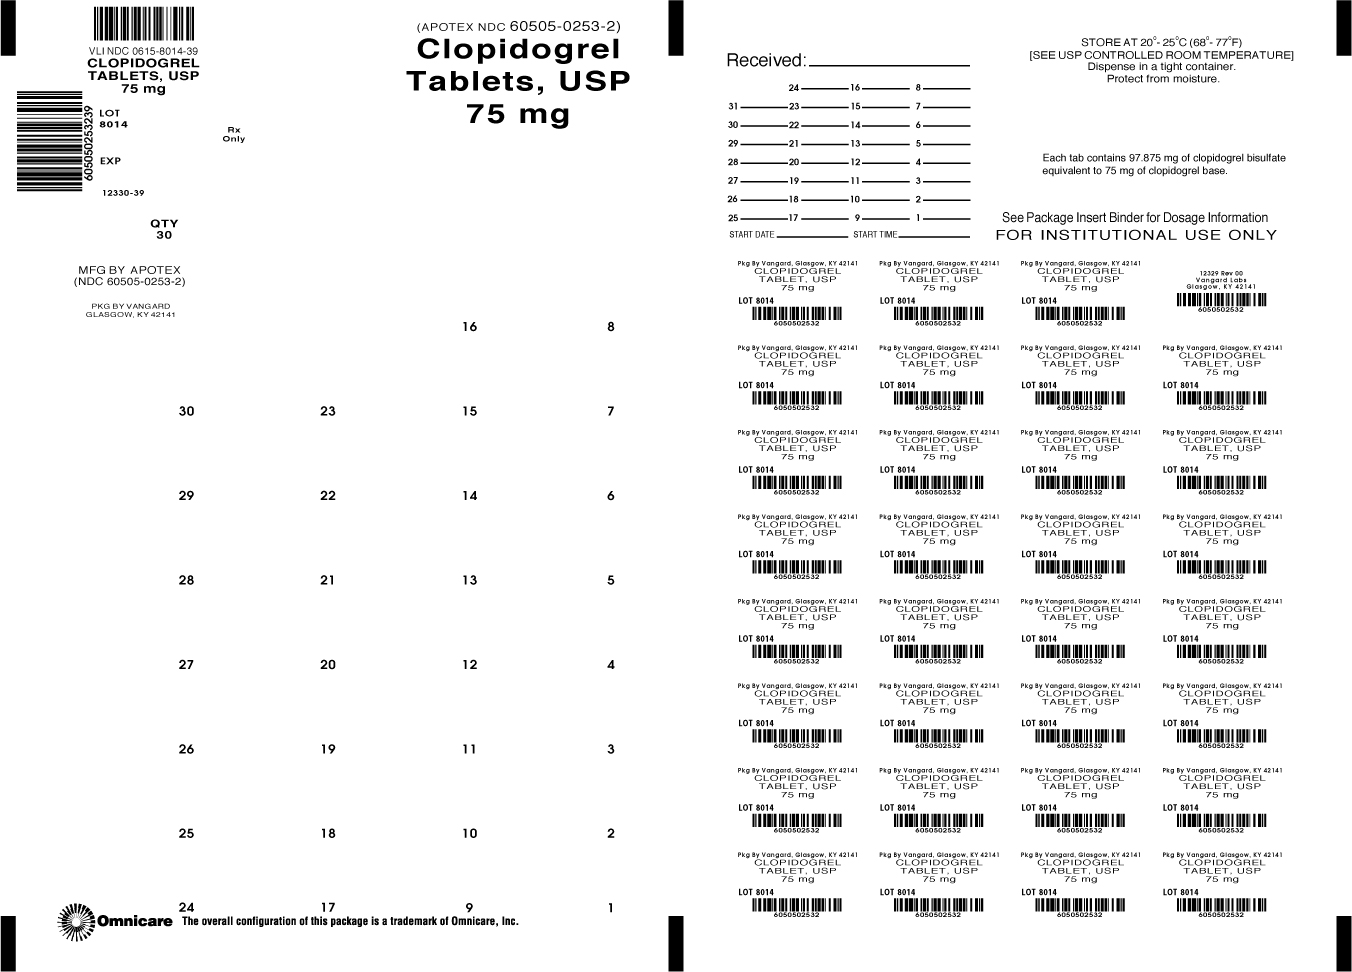 Clopidogrel Tebs 75mg bingo label